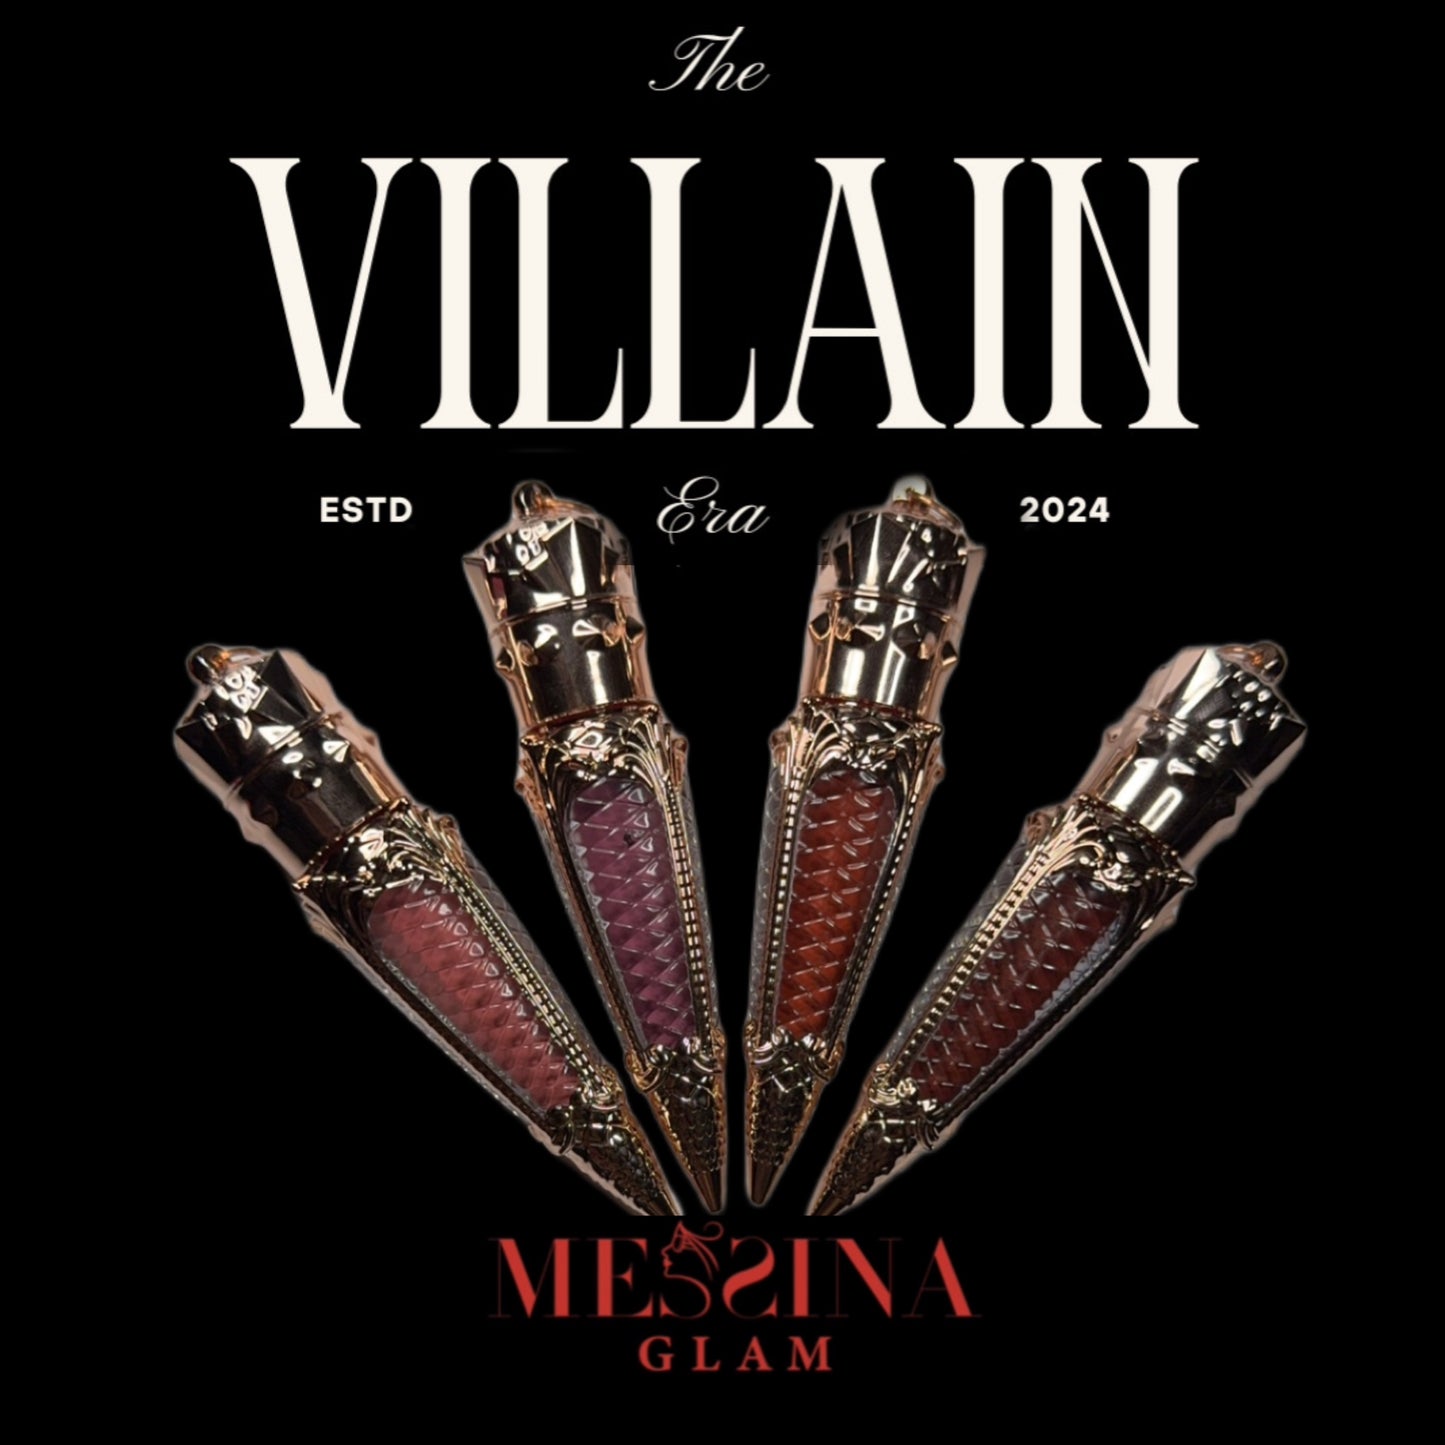 The Villain Era Lipgloss - AVAILABLE AUGUST 30th